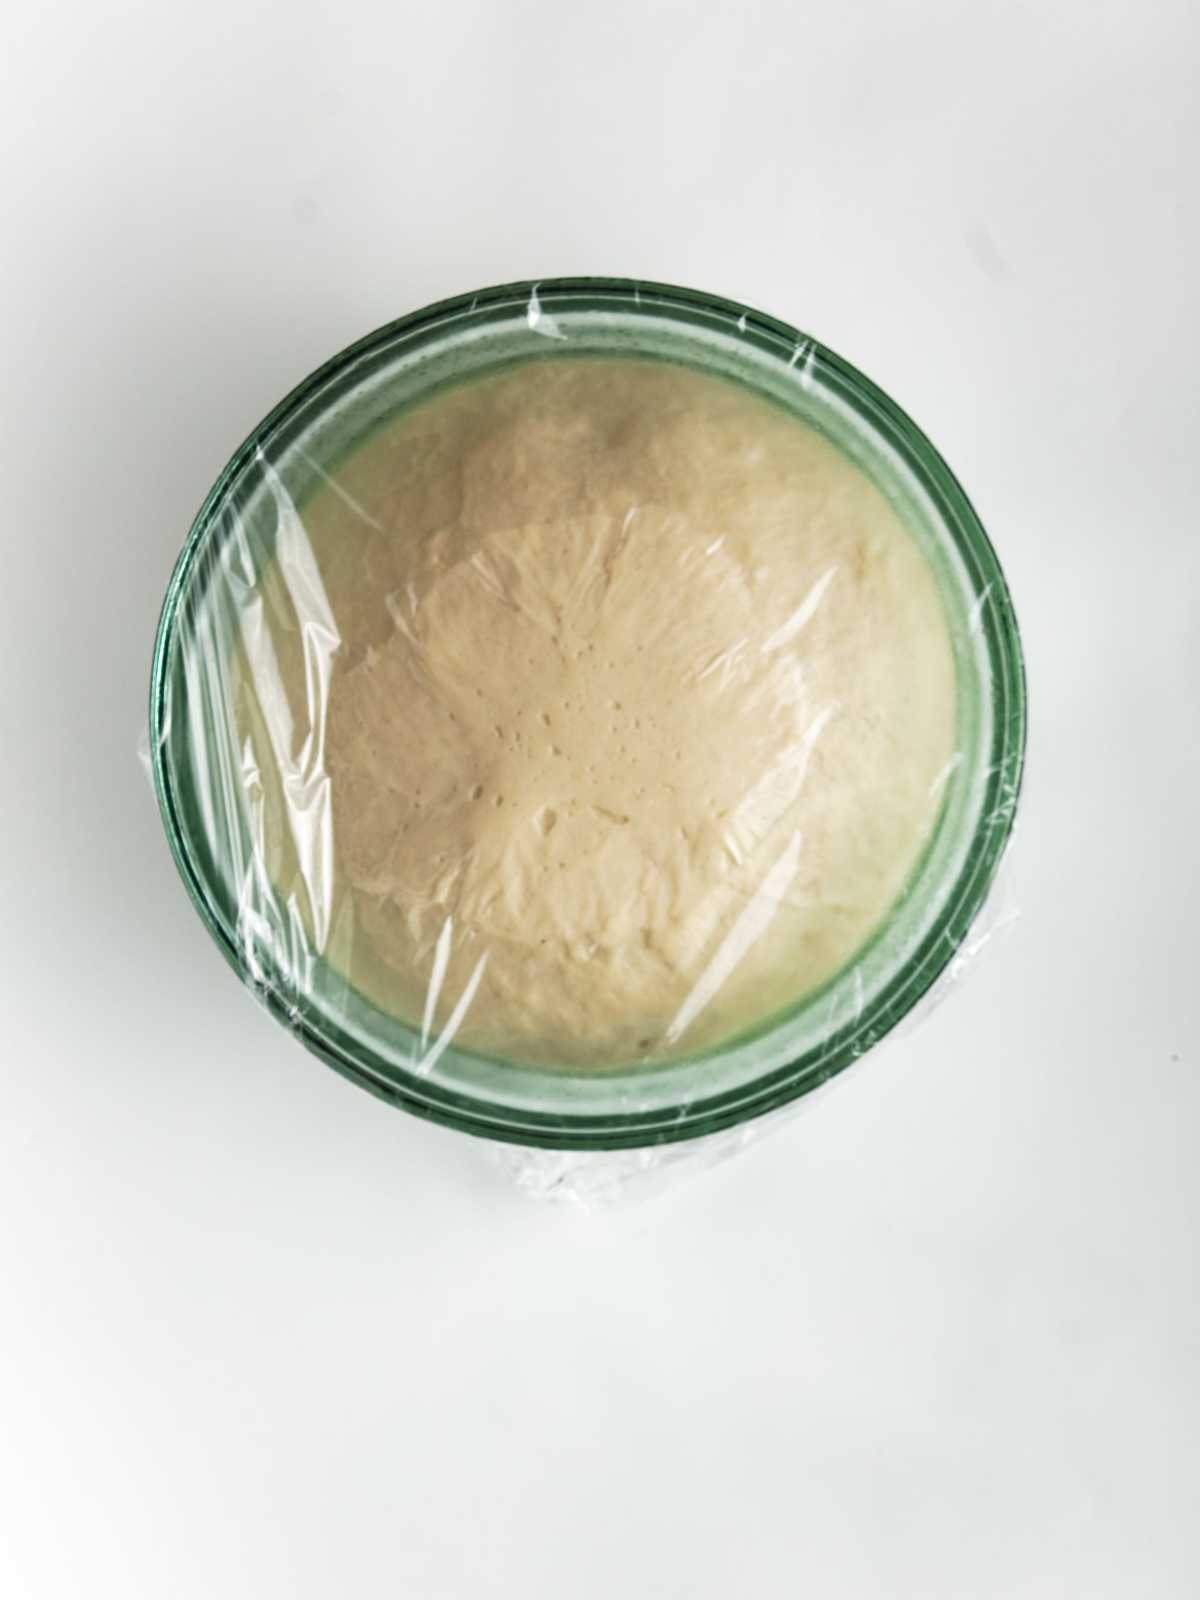 bowl of risen dough.